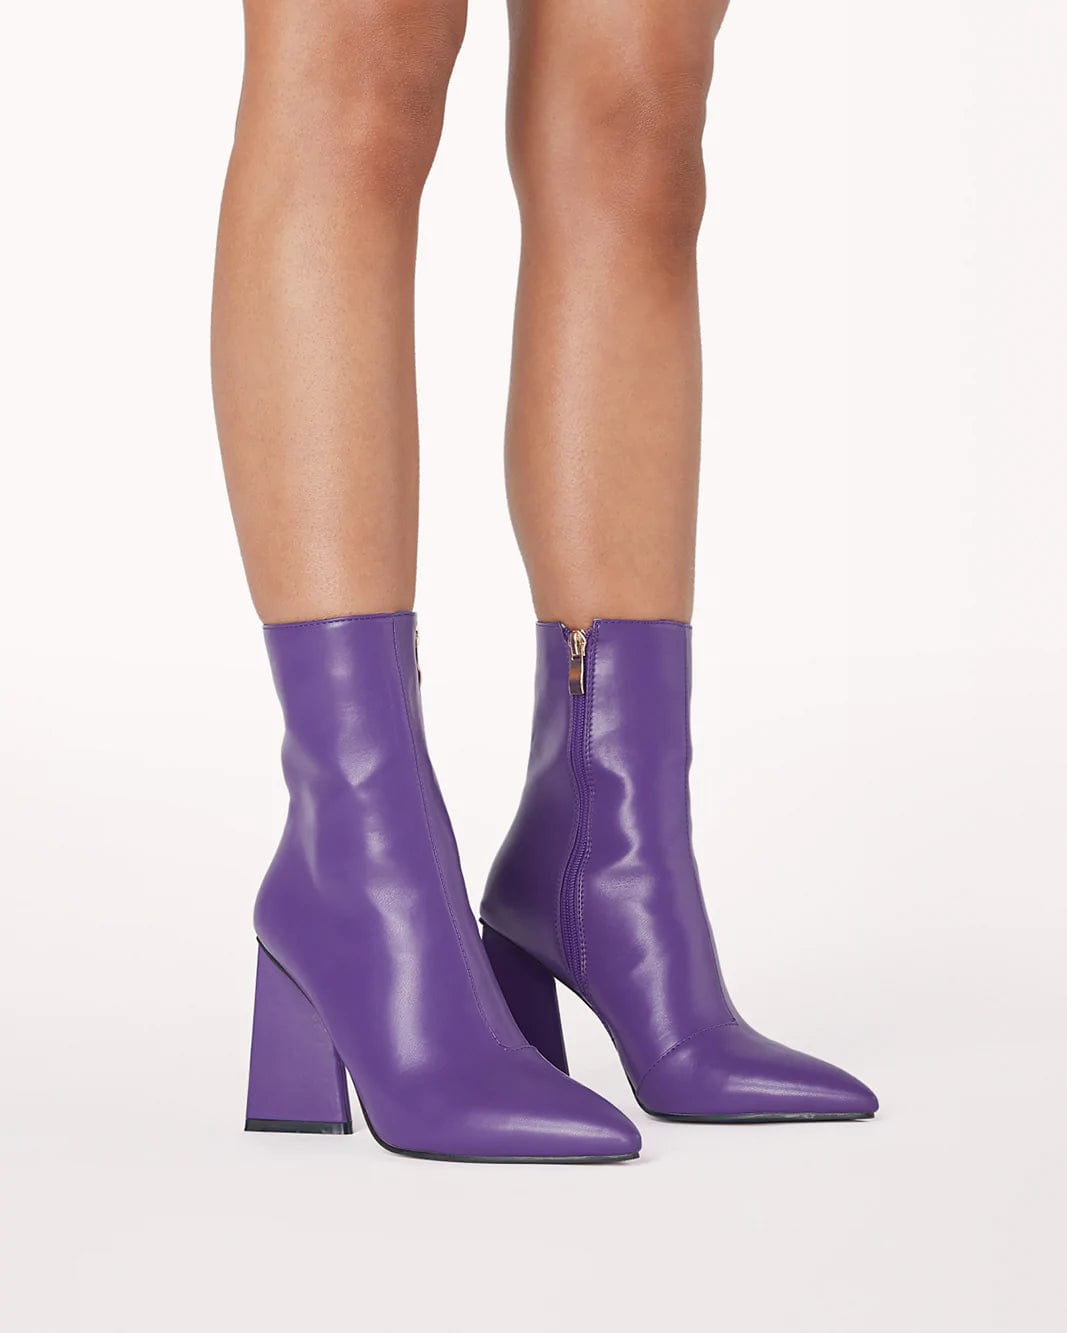 Felka Ankle Boot Violet, Shoes by Billini Shoes | LIT Boutique